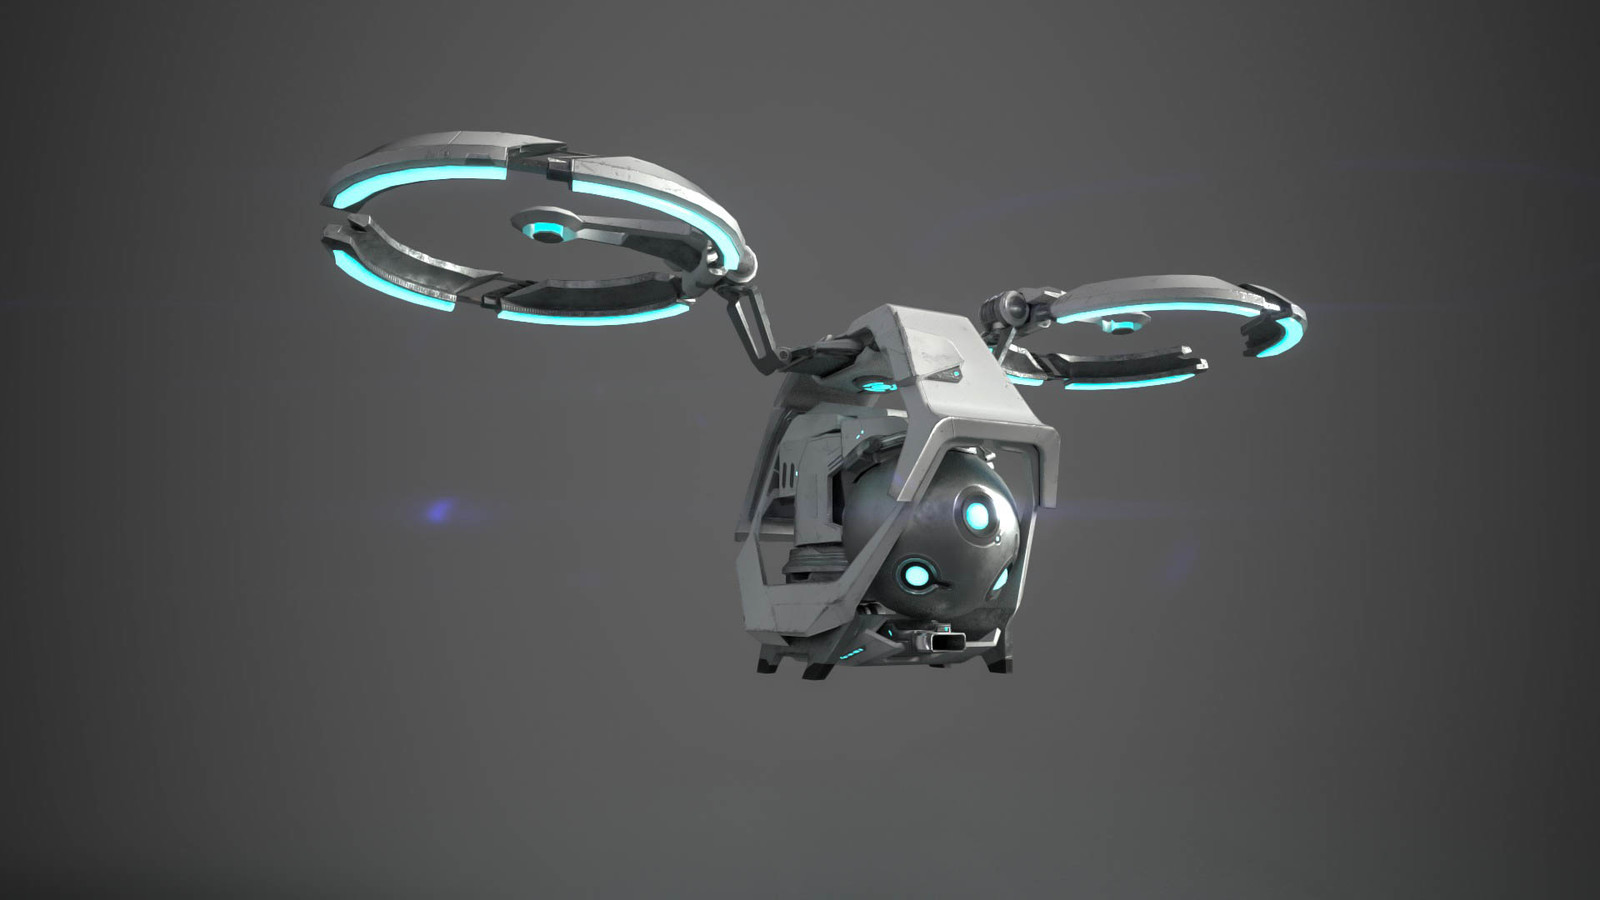 Drone patrol